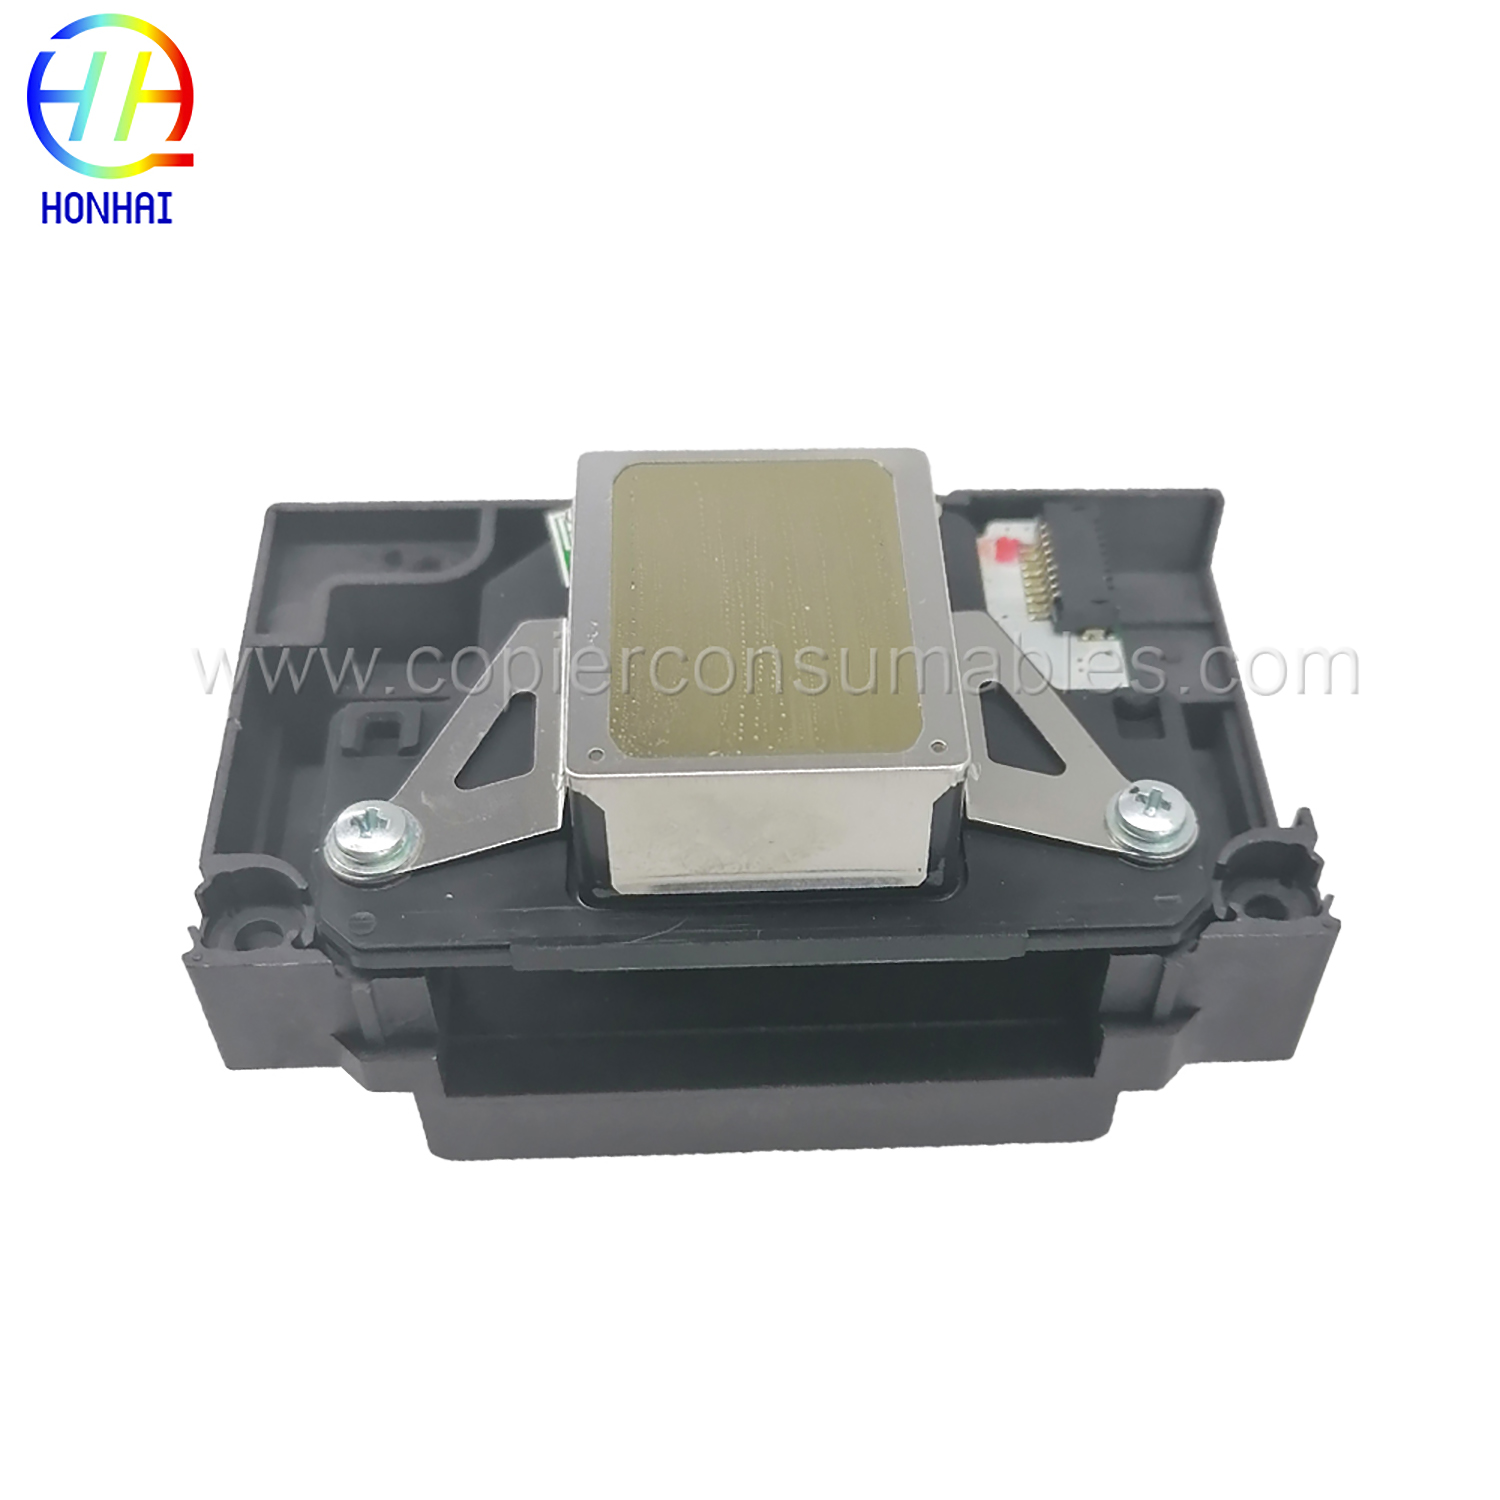 Cabezal de impresión compatible con Epson L1800 1410 1430 1500W